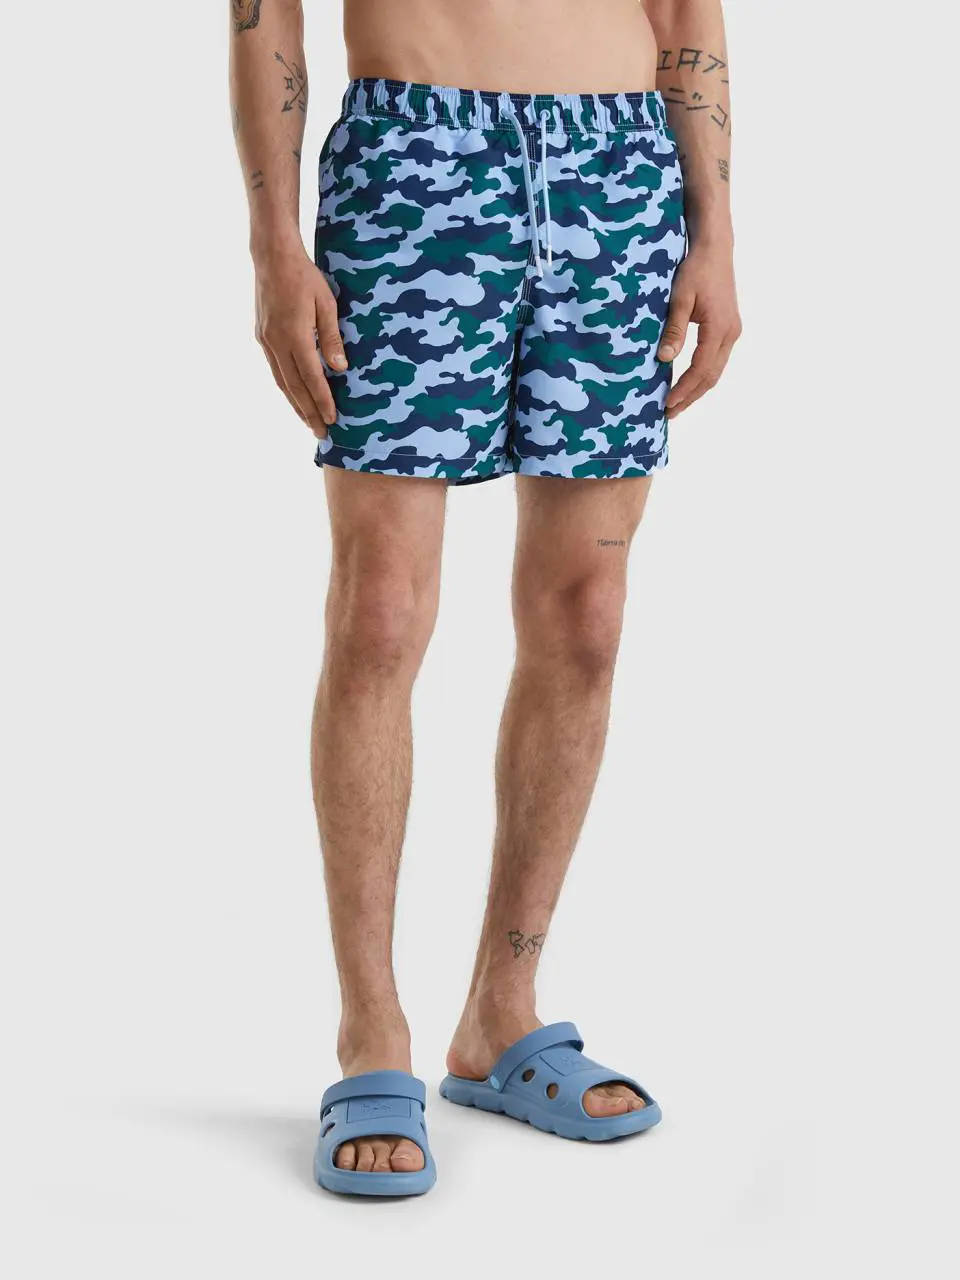 Benetton swim trunks with camouflage print. 1